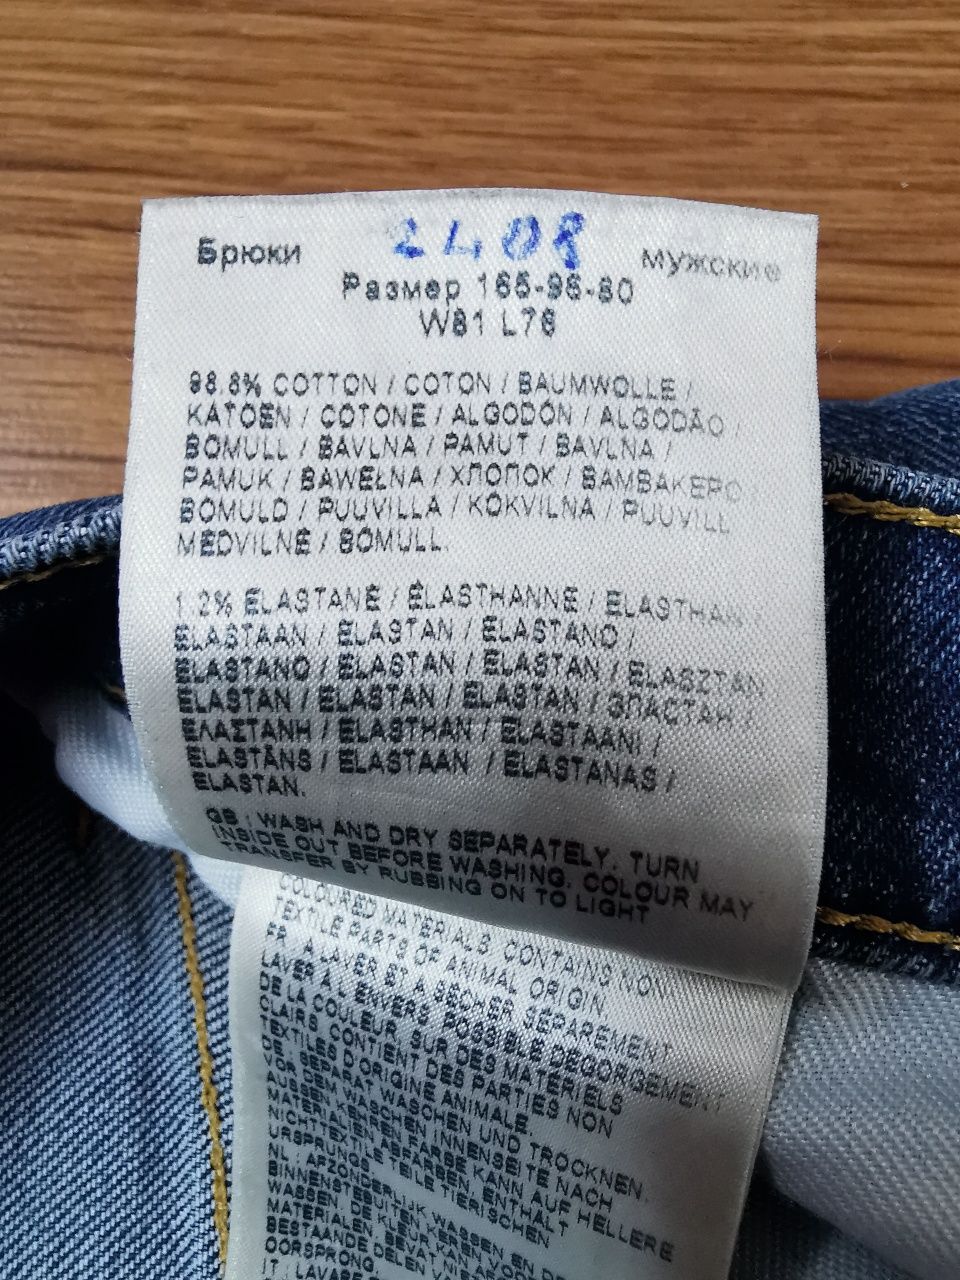 LEE Brooklyn Straight W32 L30 spodnie jeansowe jeansy